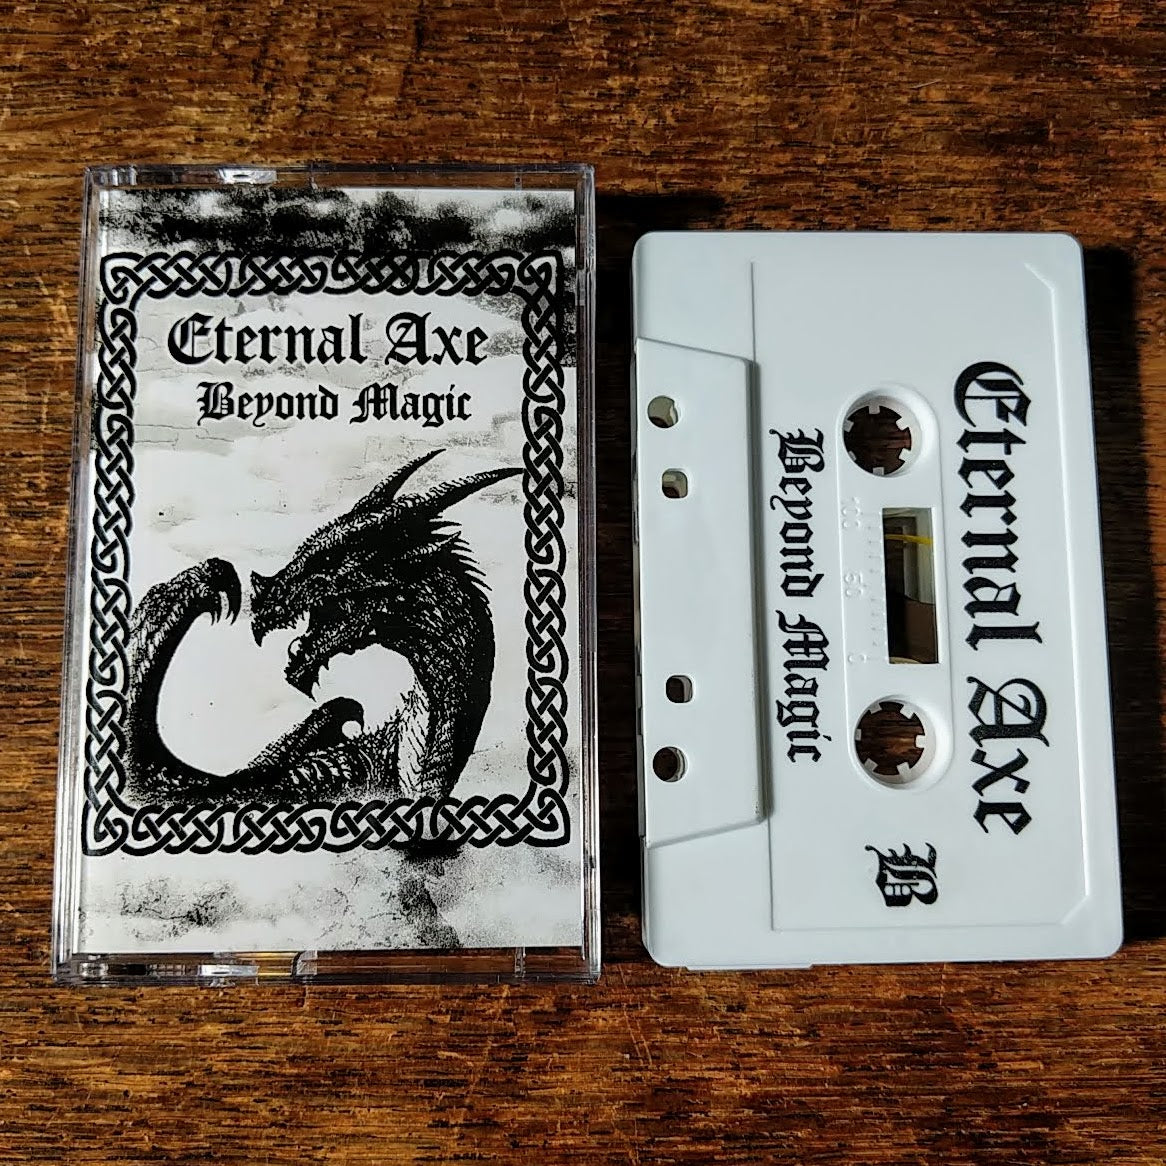 [SOLD OUT] ETERNAL AXE "Beyond Magic" Cassette Tape